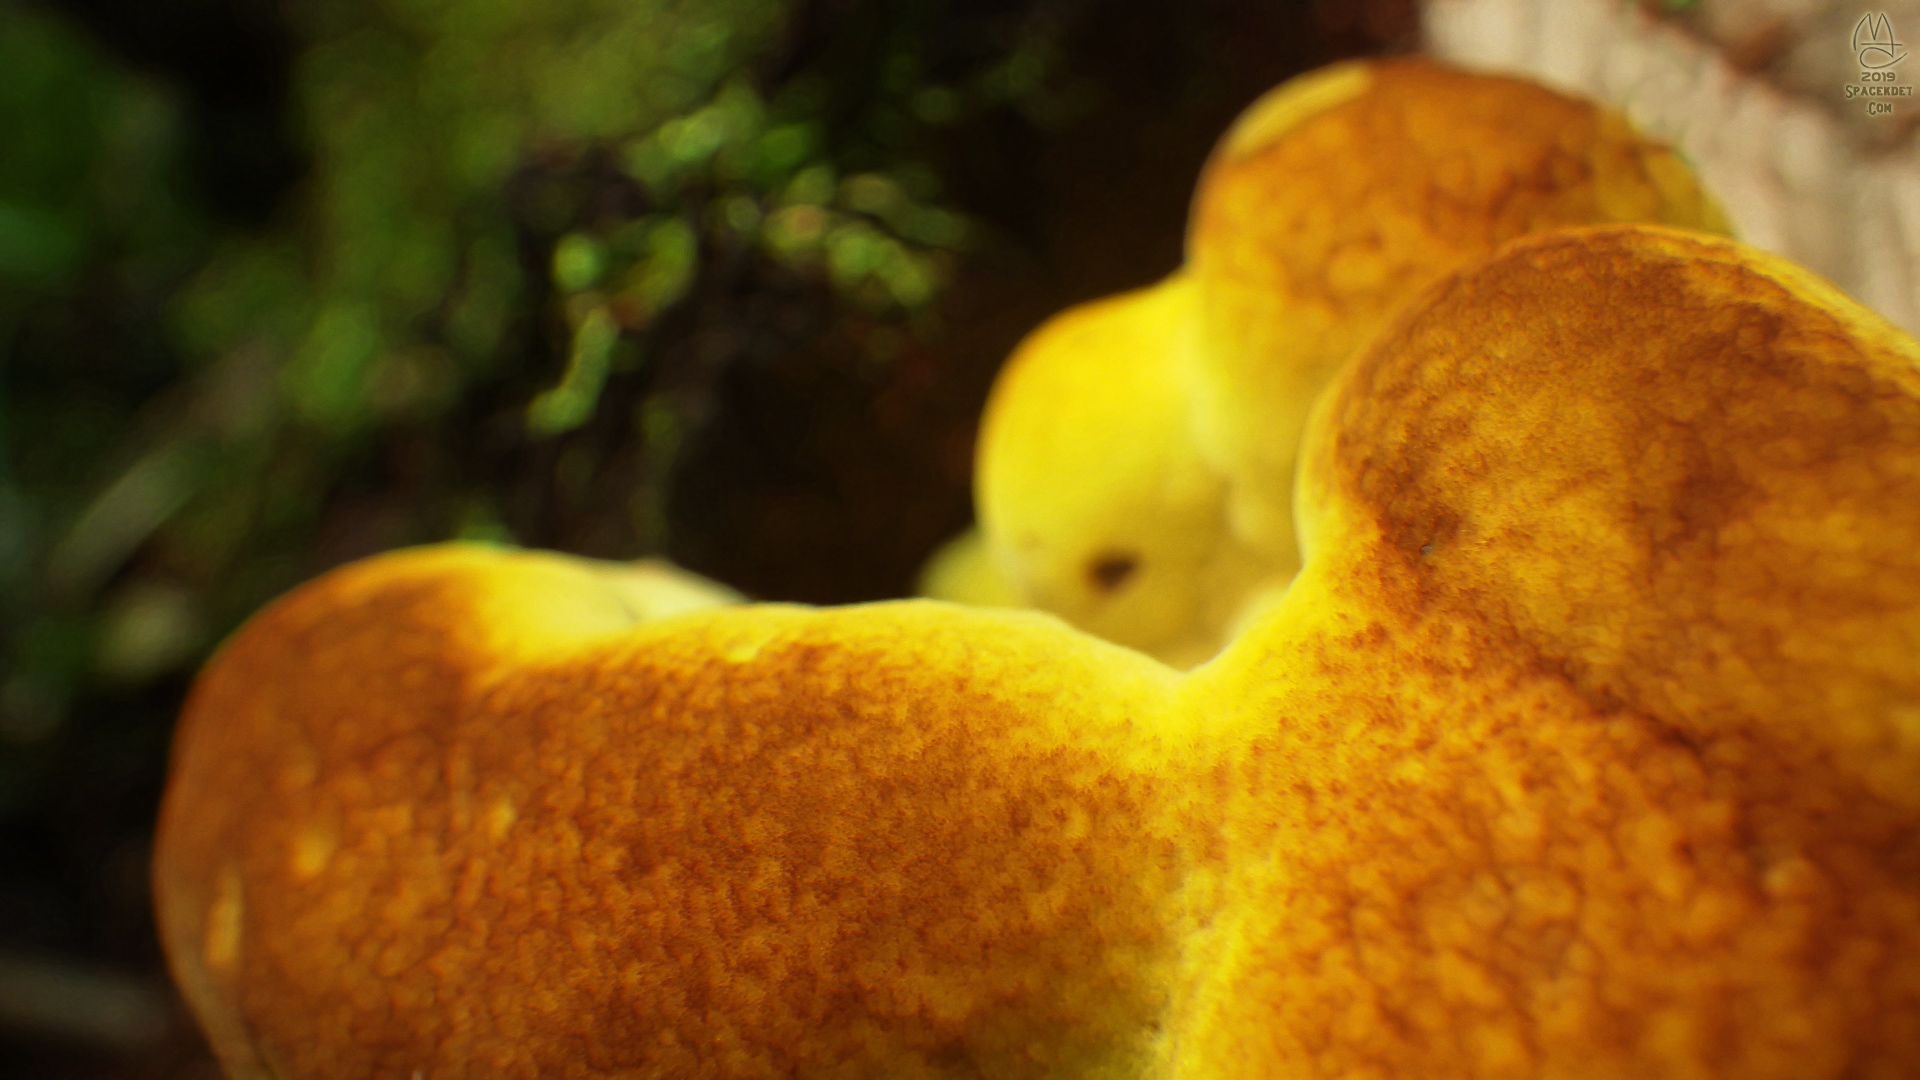 Fungus close up.